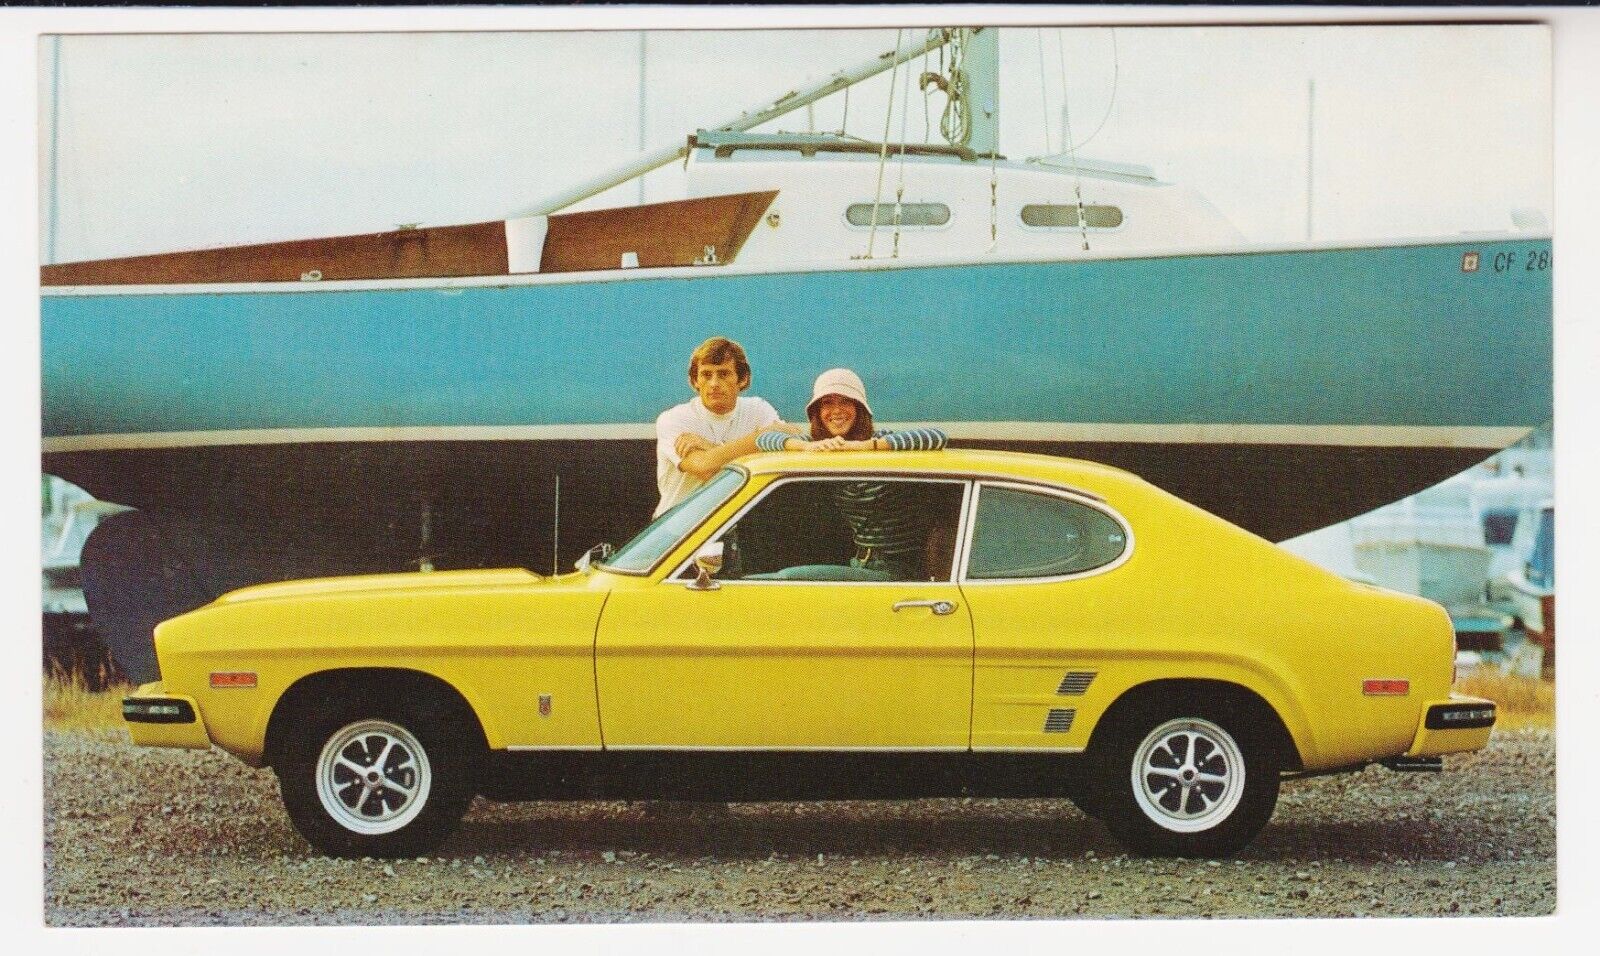 1974 FORD CAPRI 2800 V-6 – 2-DOOR SPORT COUPE - Postcard